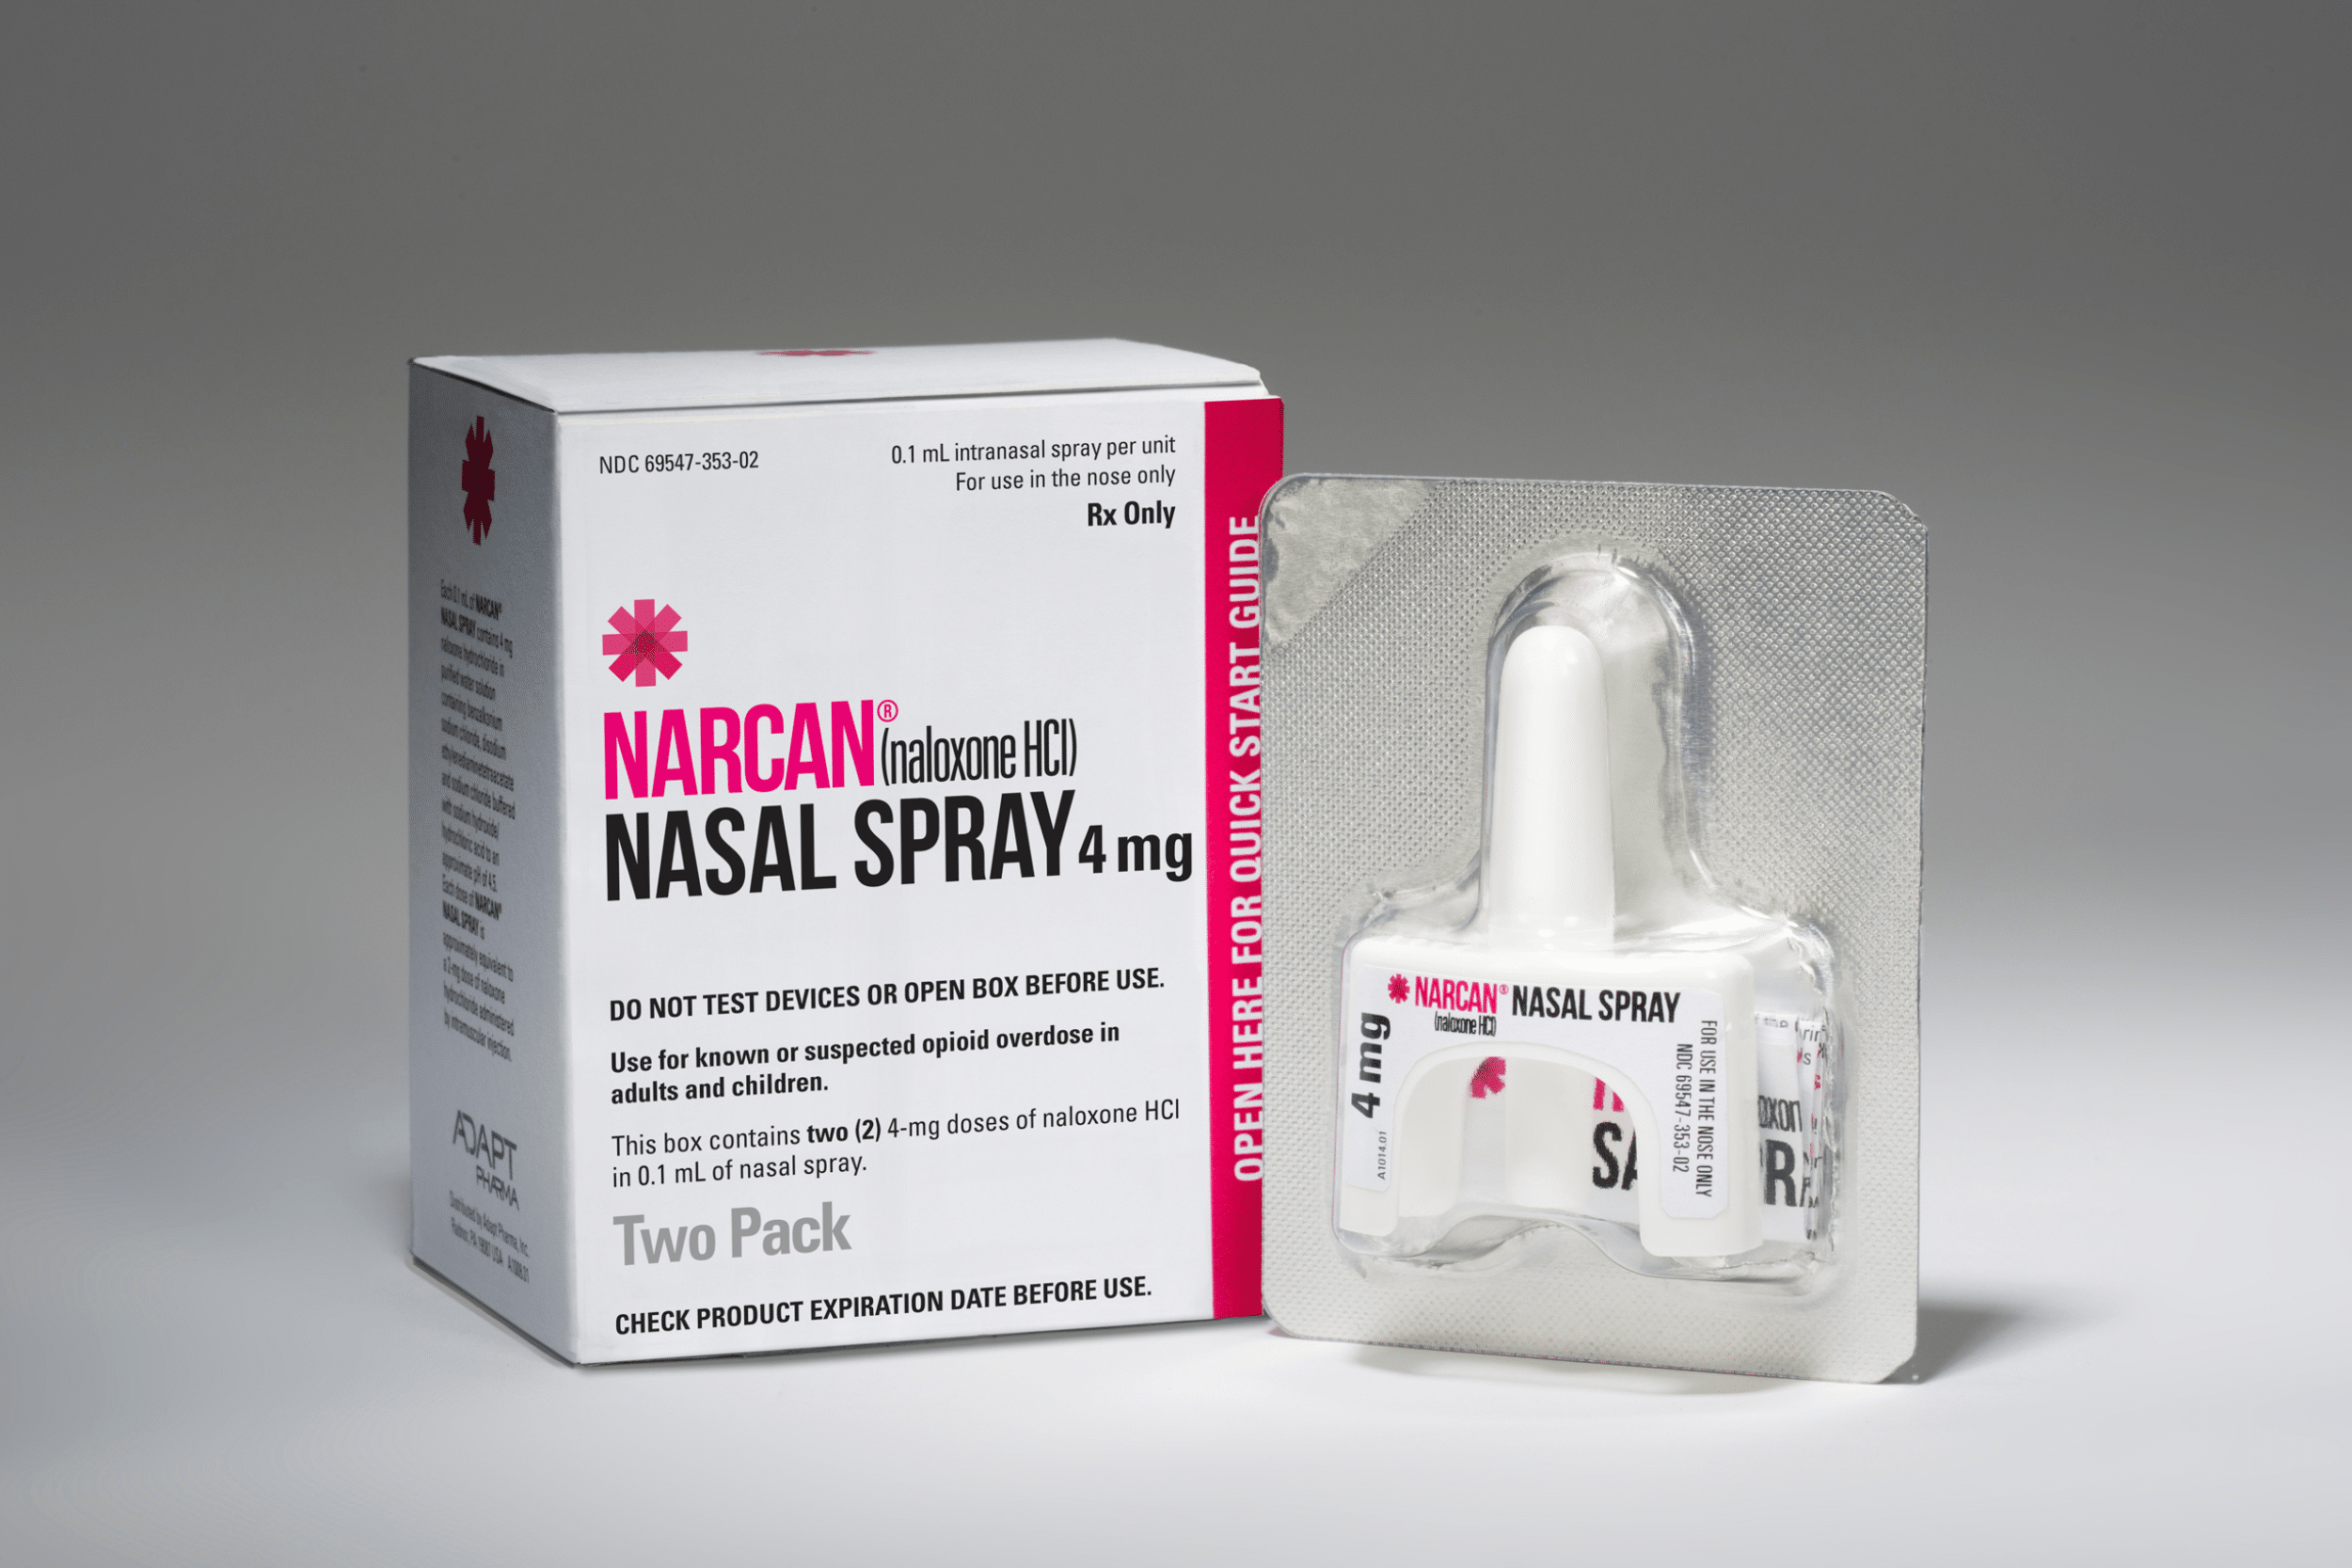 Narcan nasal spray, a life-saving Naloxone medication used to combat opioid overdoses.